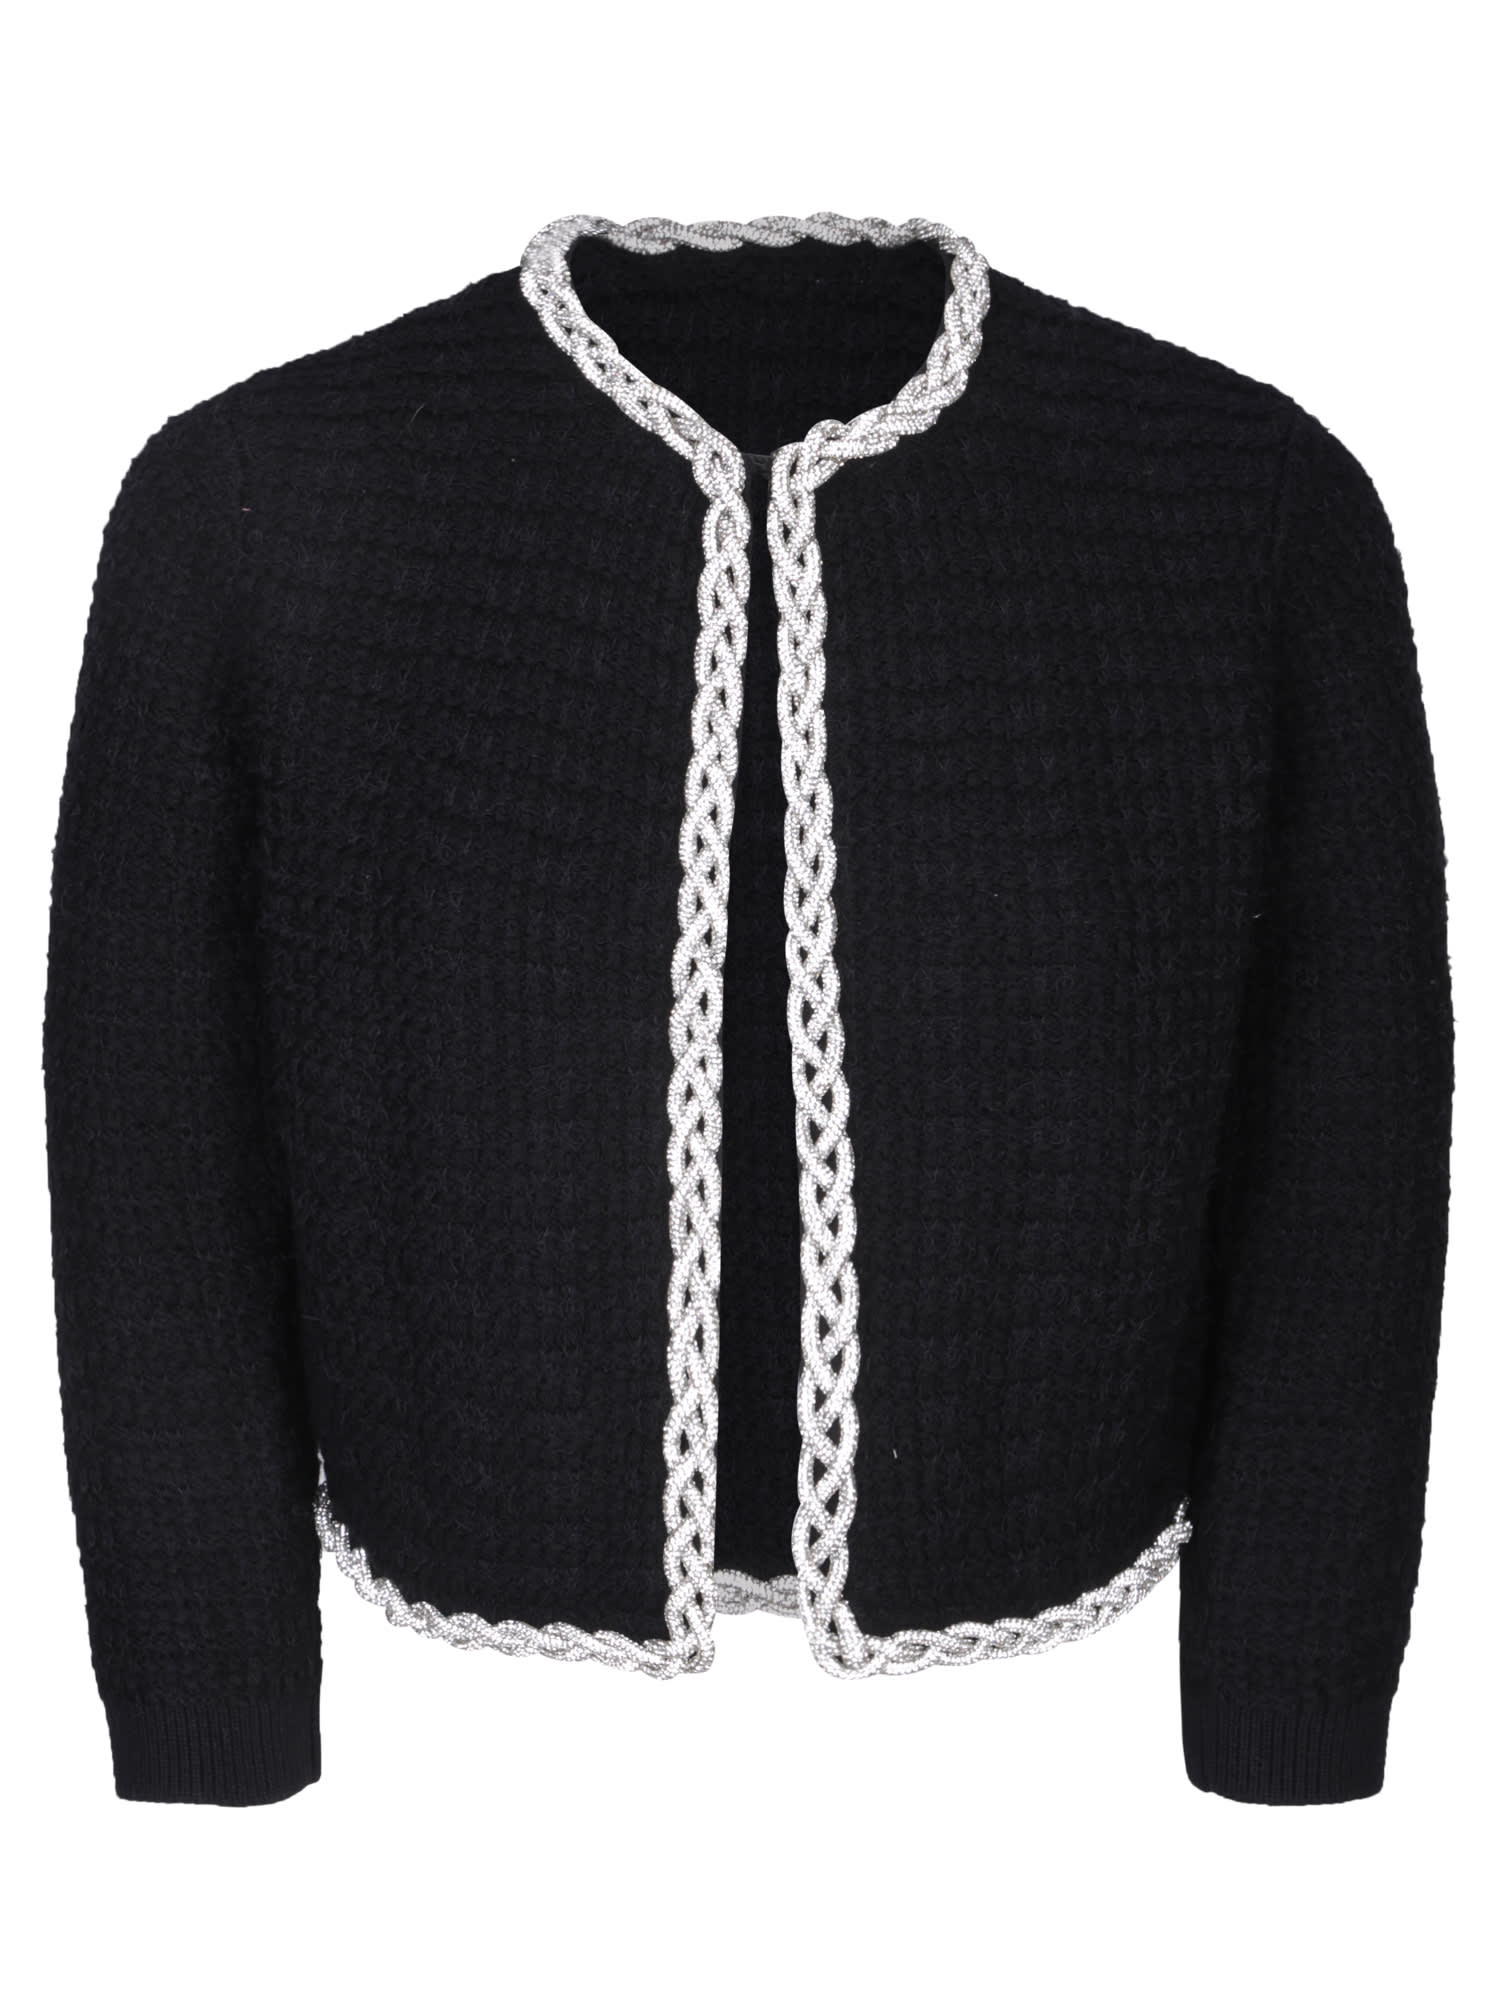 Crystal Black Tweed Cardigan Jacket